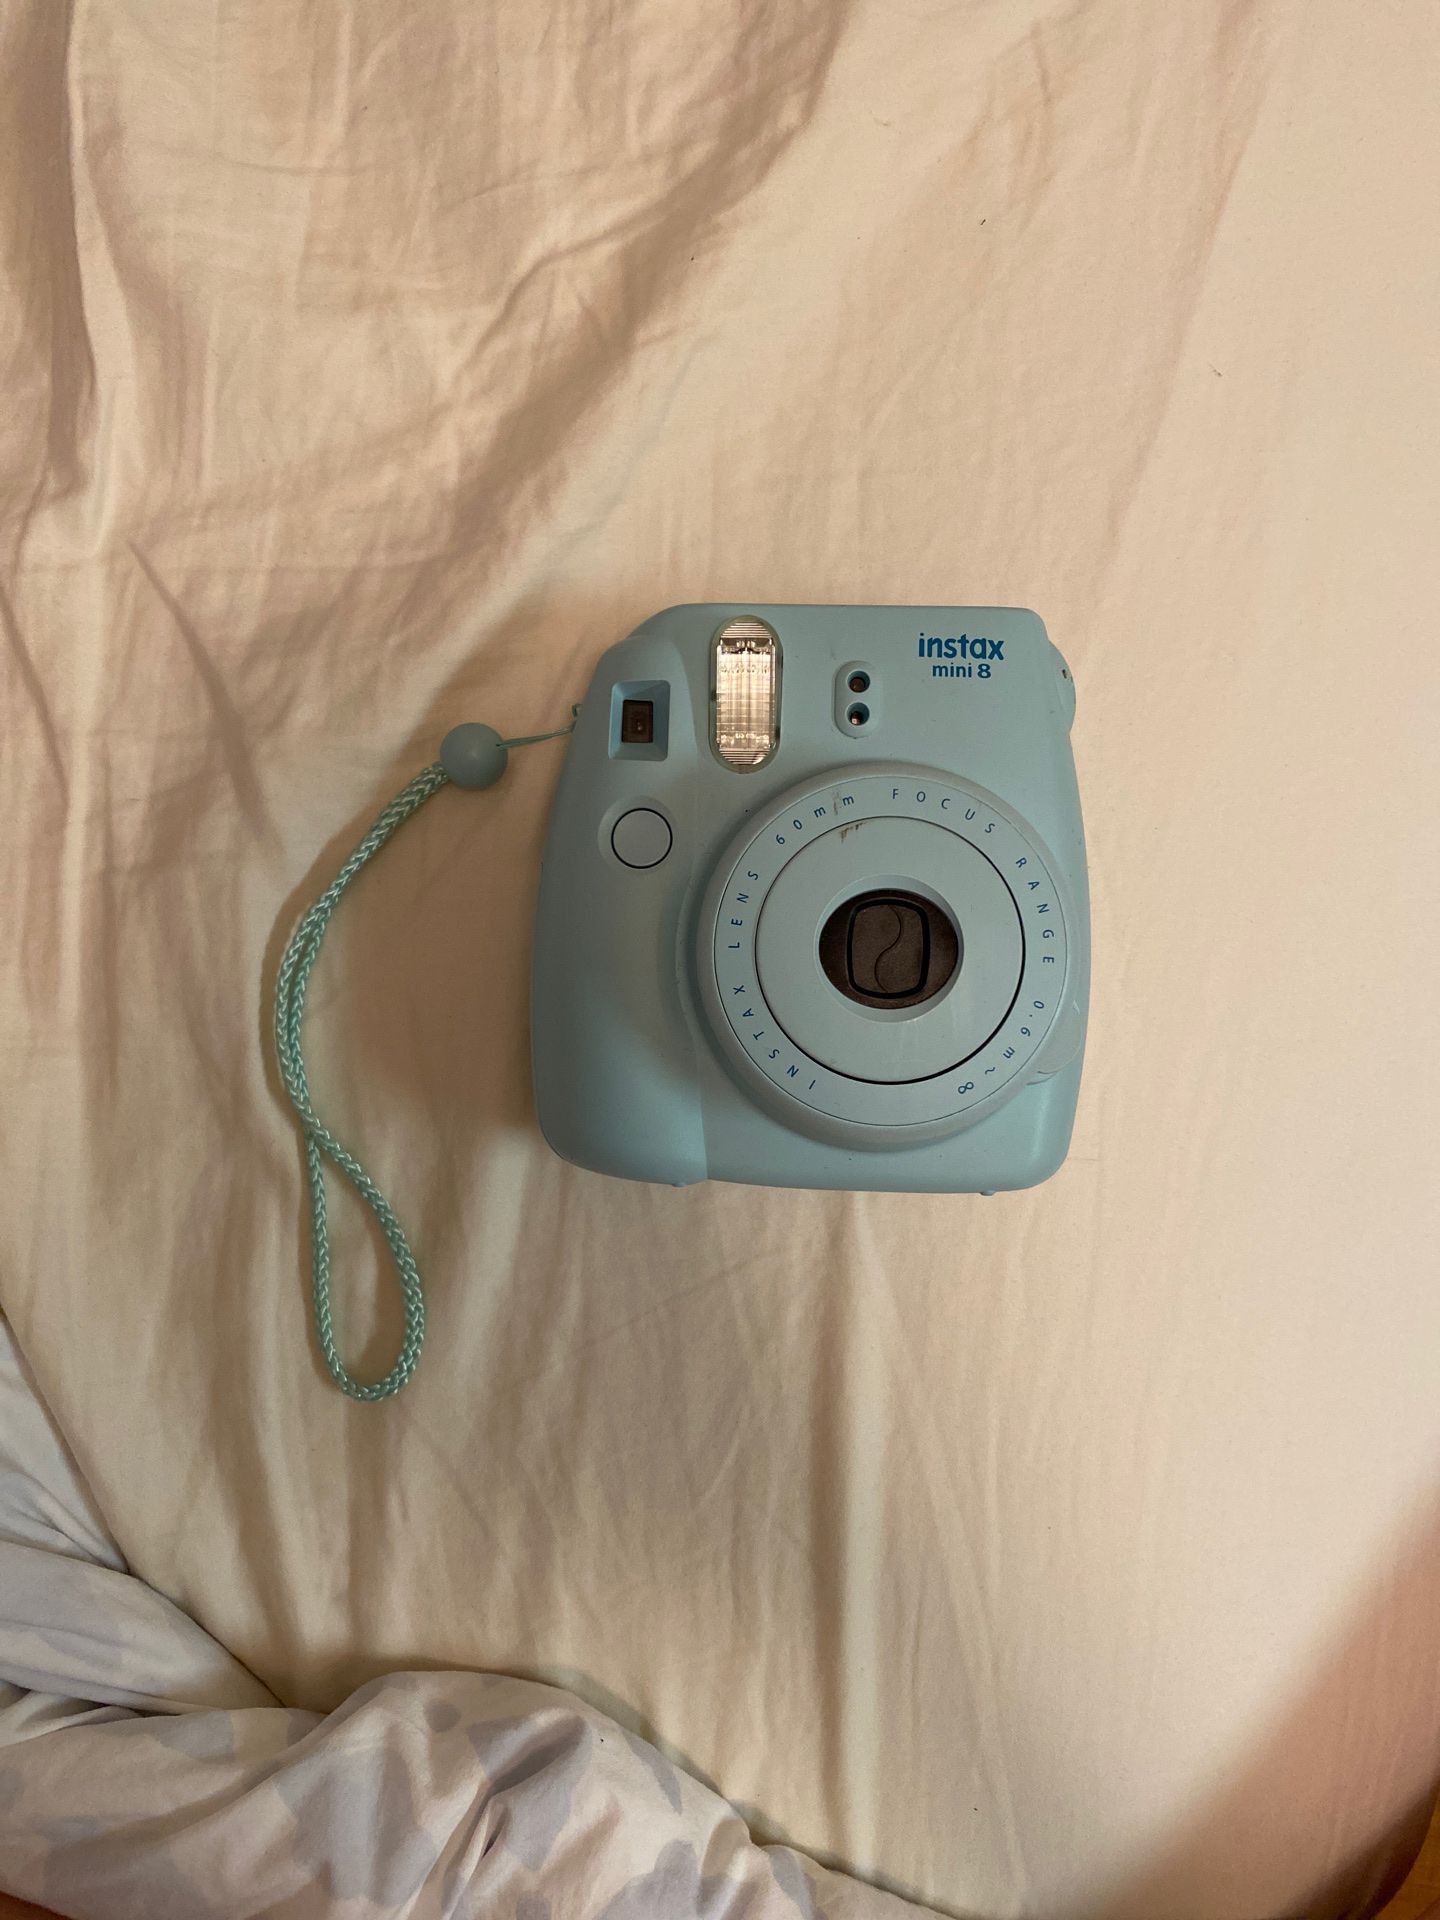 Instax Mini 8 Polaroid Camera